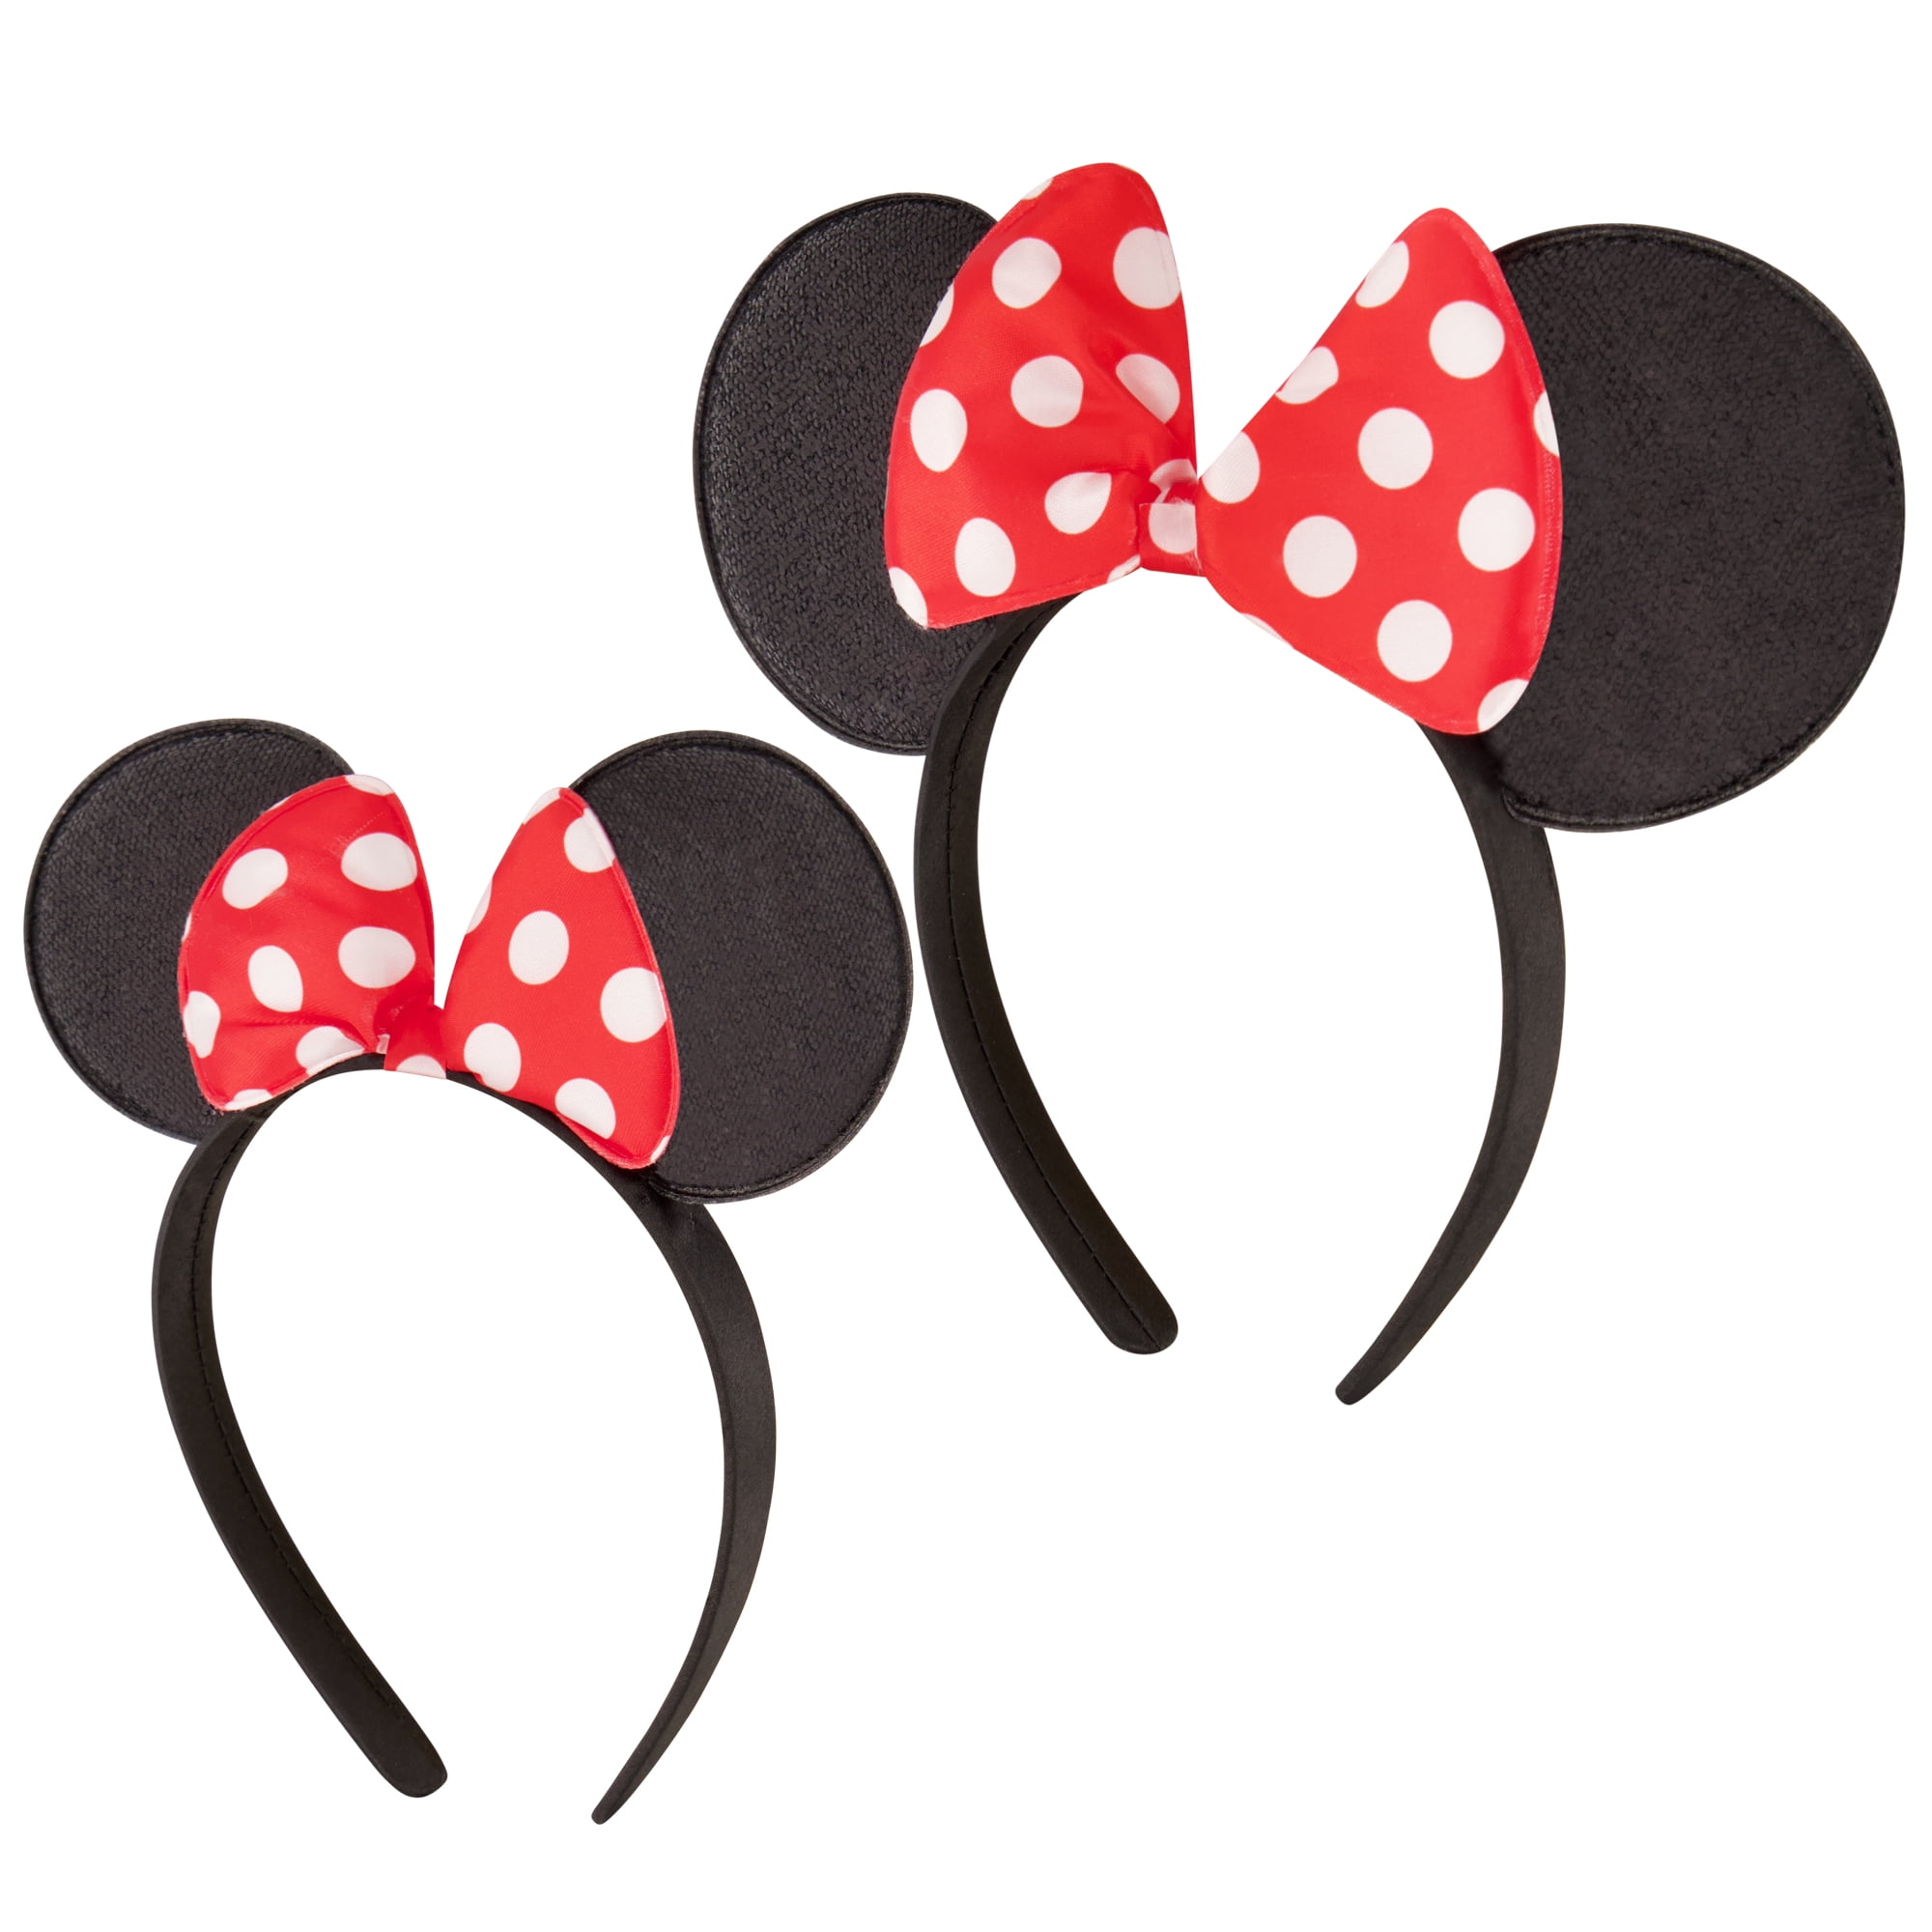 Disney Minnie Mouse ears headband (mama/teen)